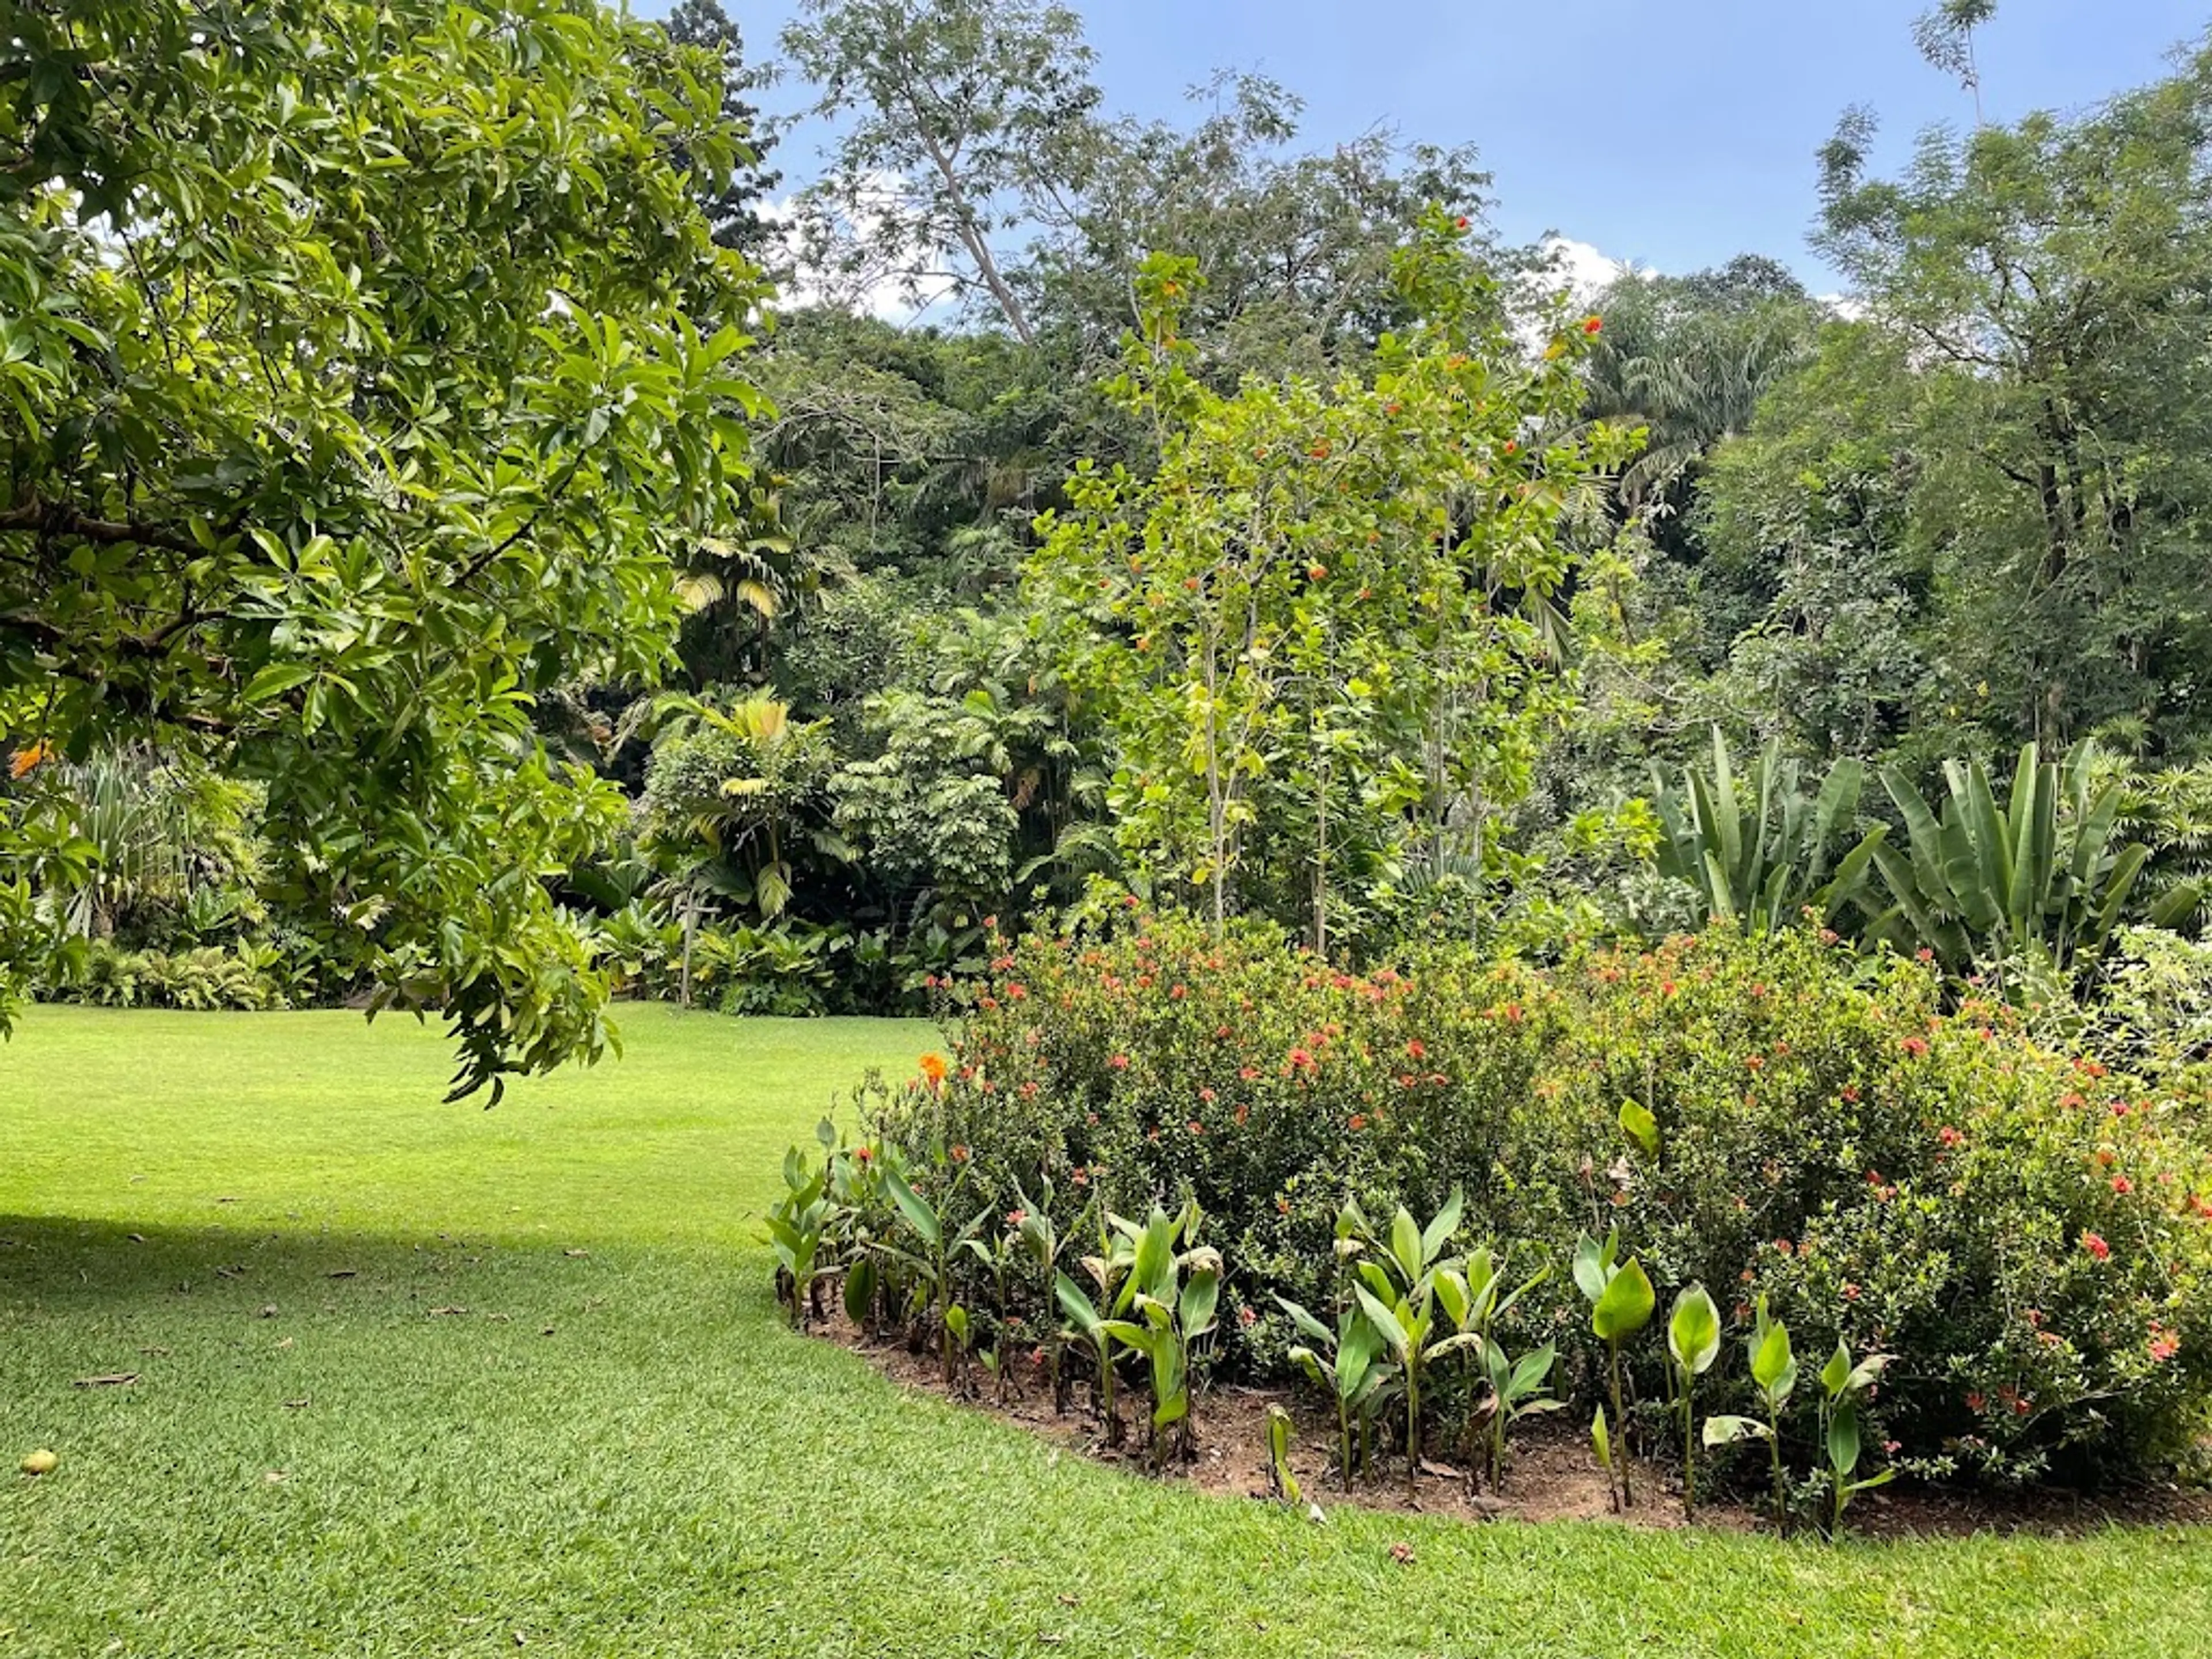 Seychelles National Botanical Gardens